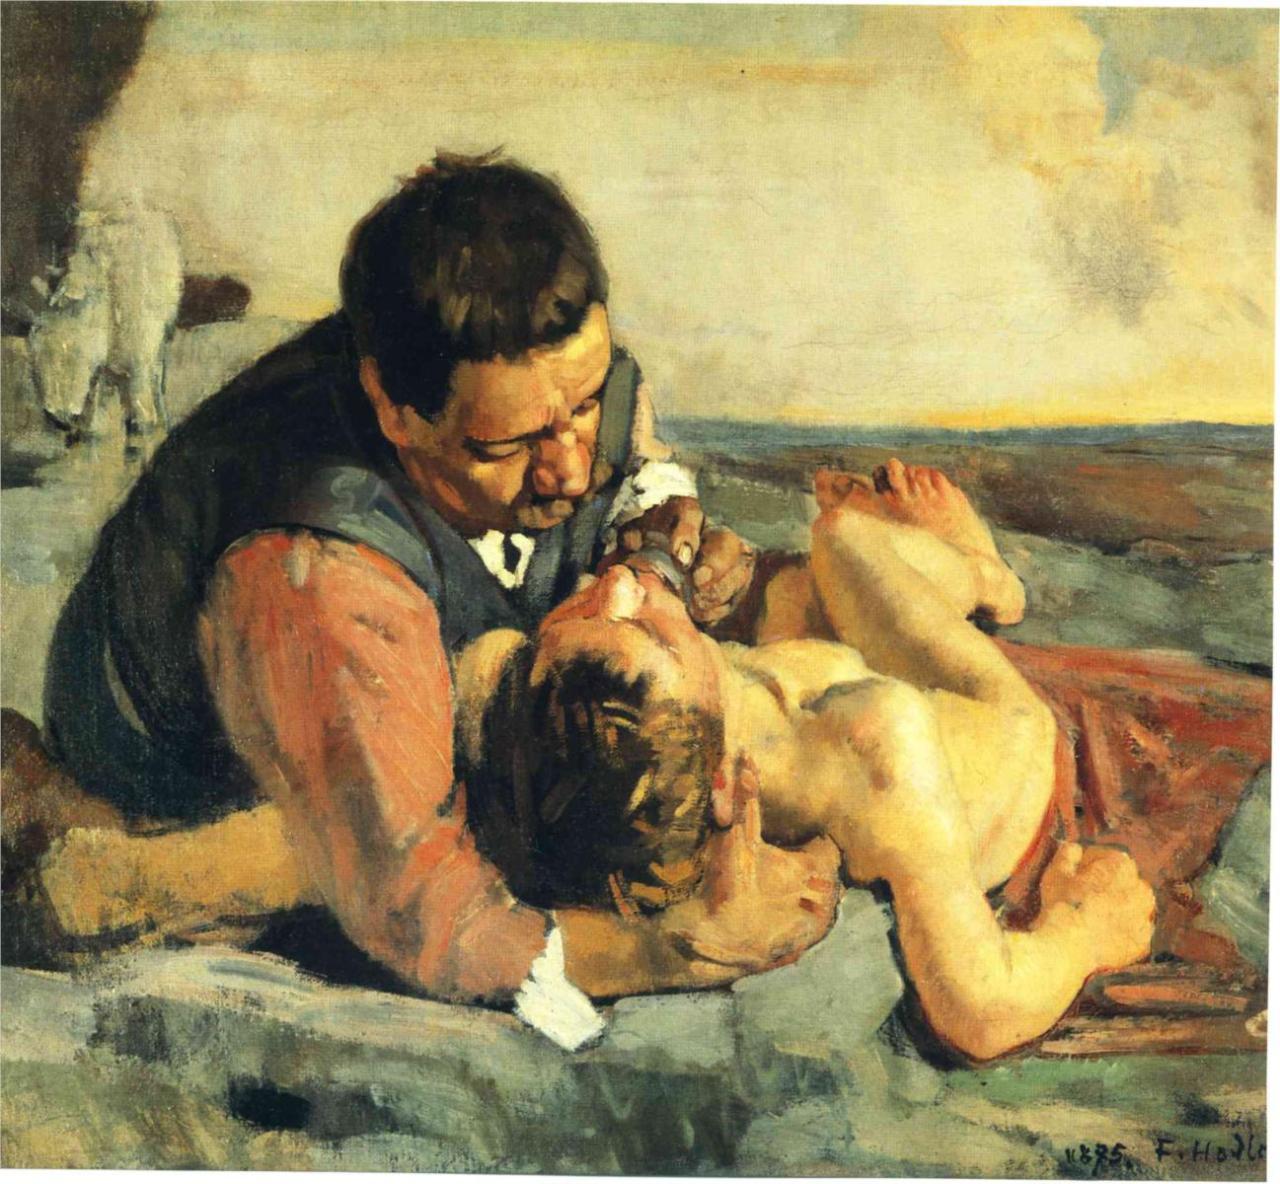 Ferdinand Hodler (Bern, 1853 - Genève, 1918), The good samaritan (1885)